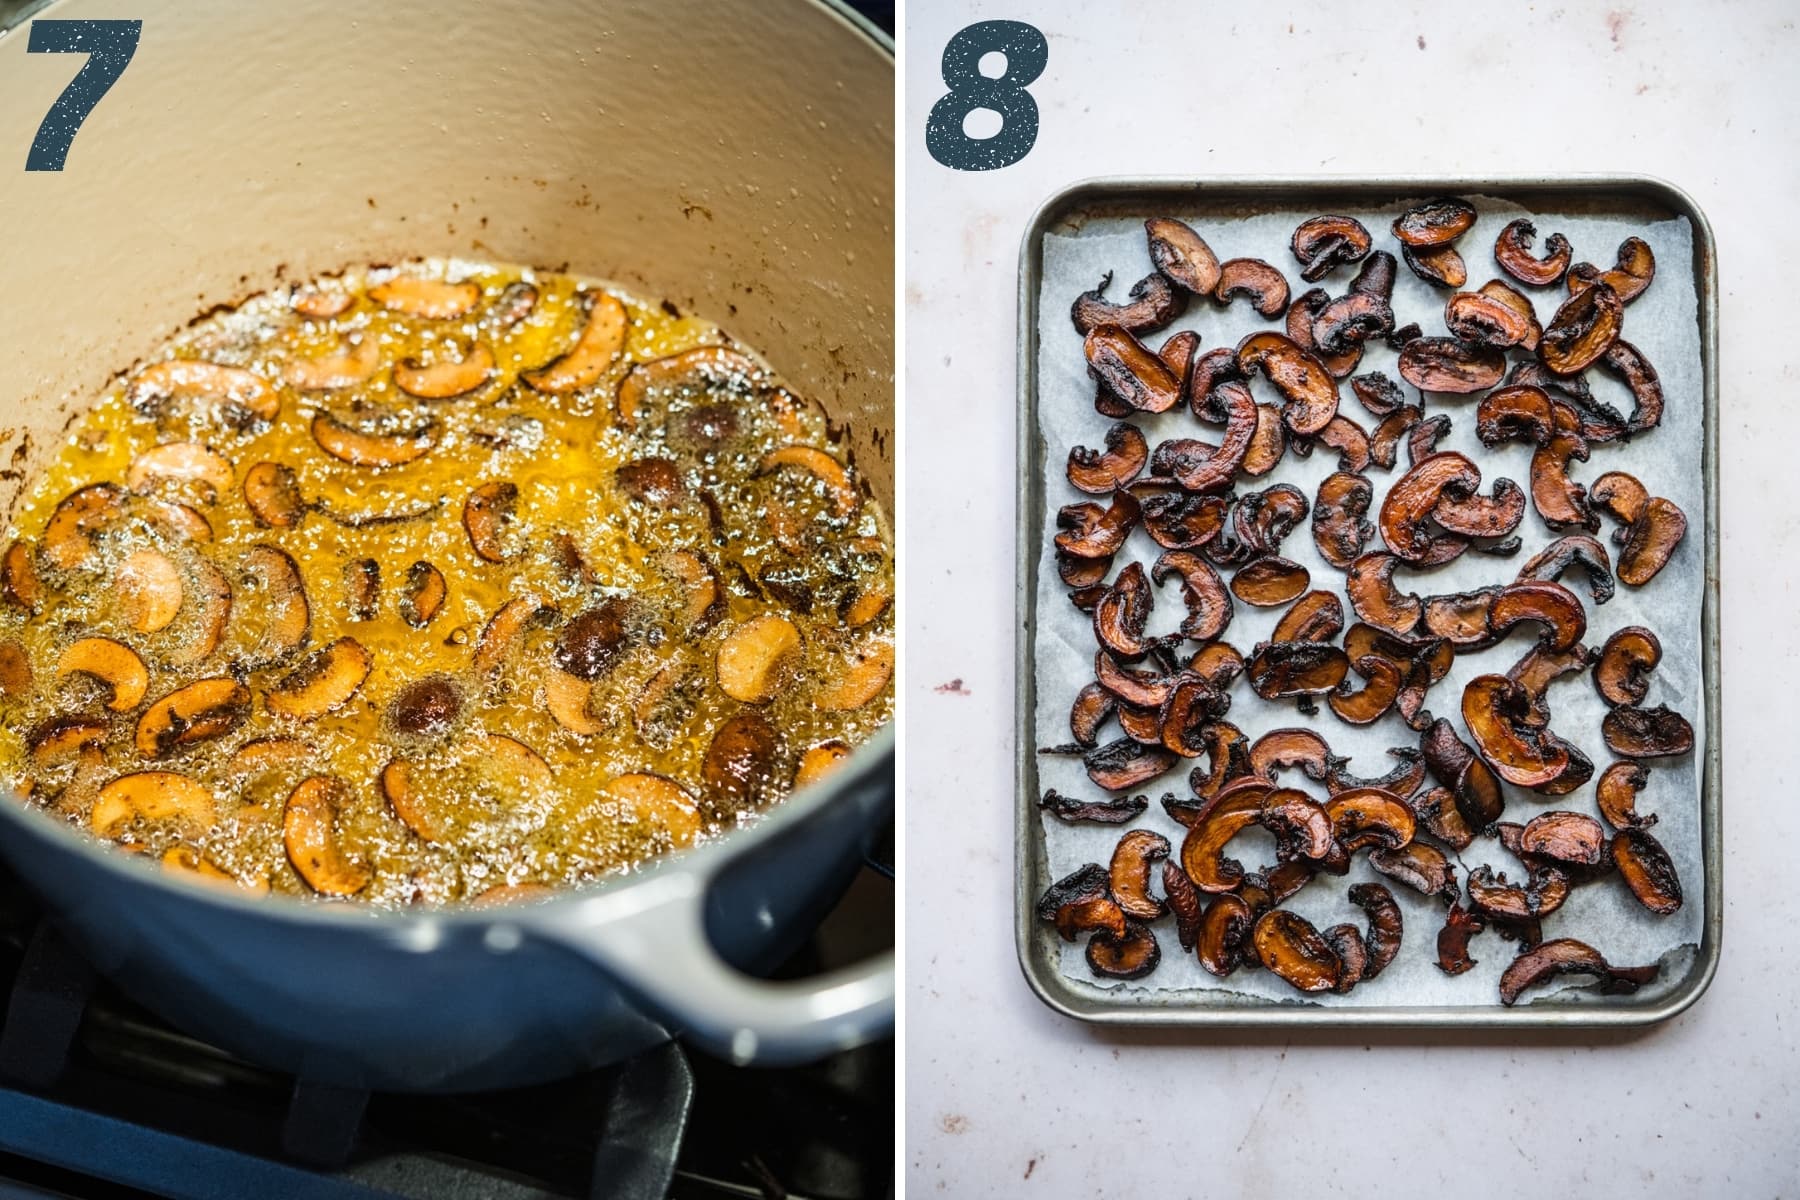 on the left: mushroom bacon deep frying in oil. on the right: mushroom bacon on a sheet pan with parchment paper. 